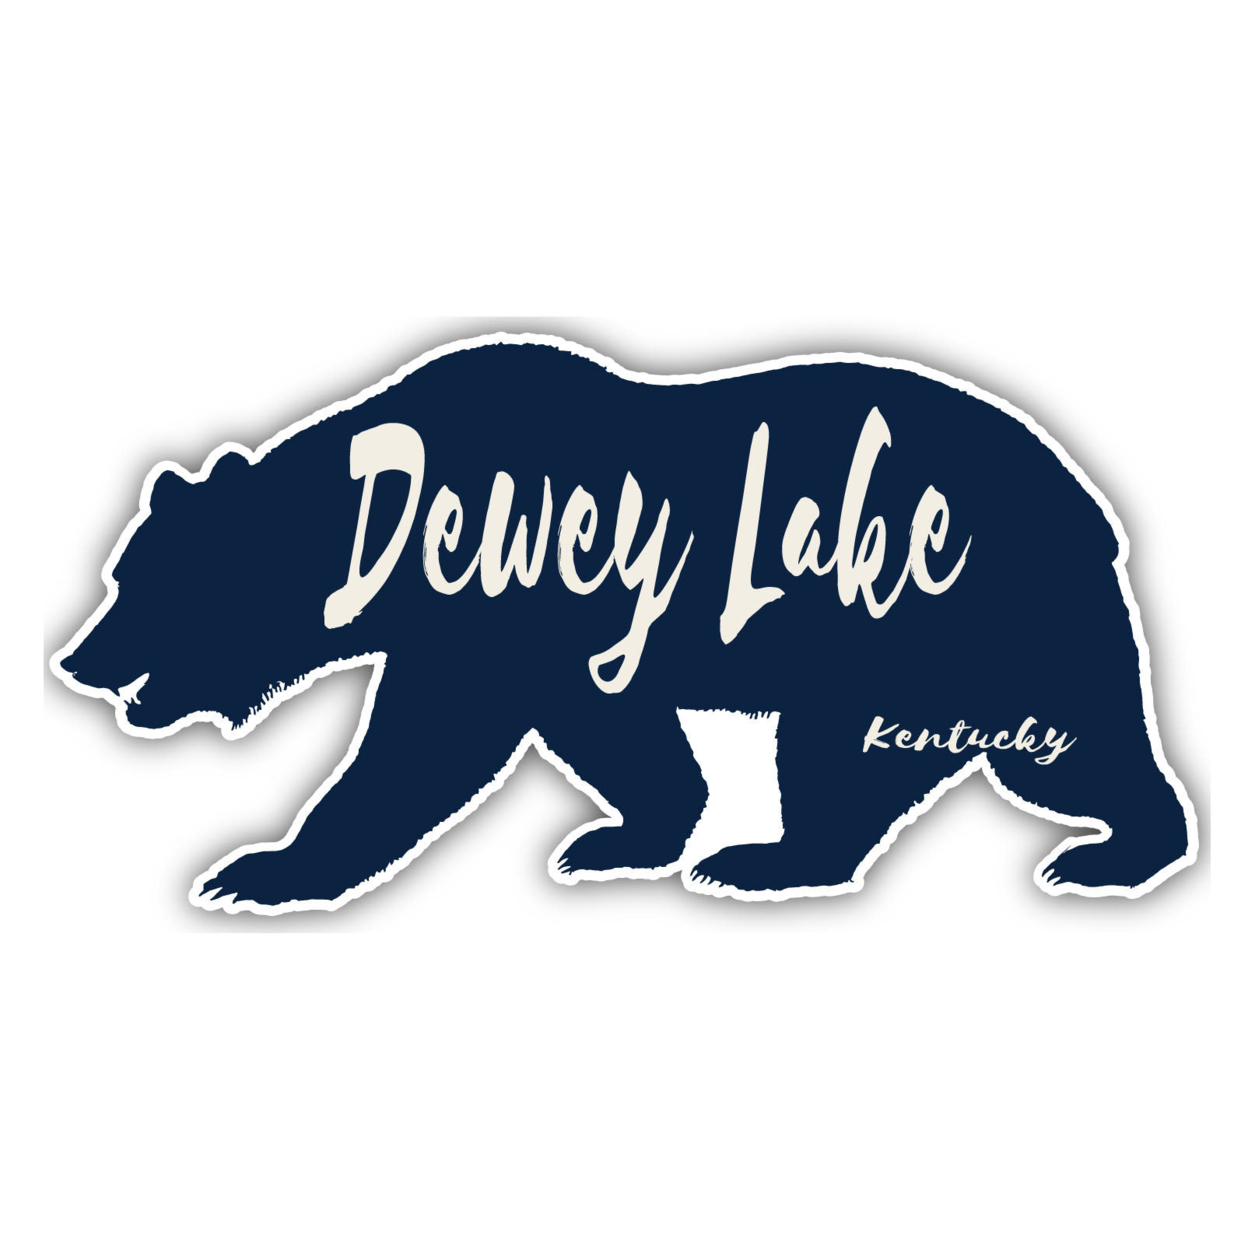 Dewey Lake Kentucky Souvenir Decorative Stickers (Choose Theme And Size) - Single Unit, 4-Inch, Bear